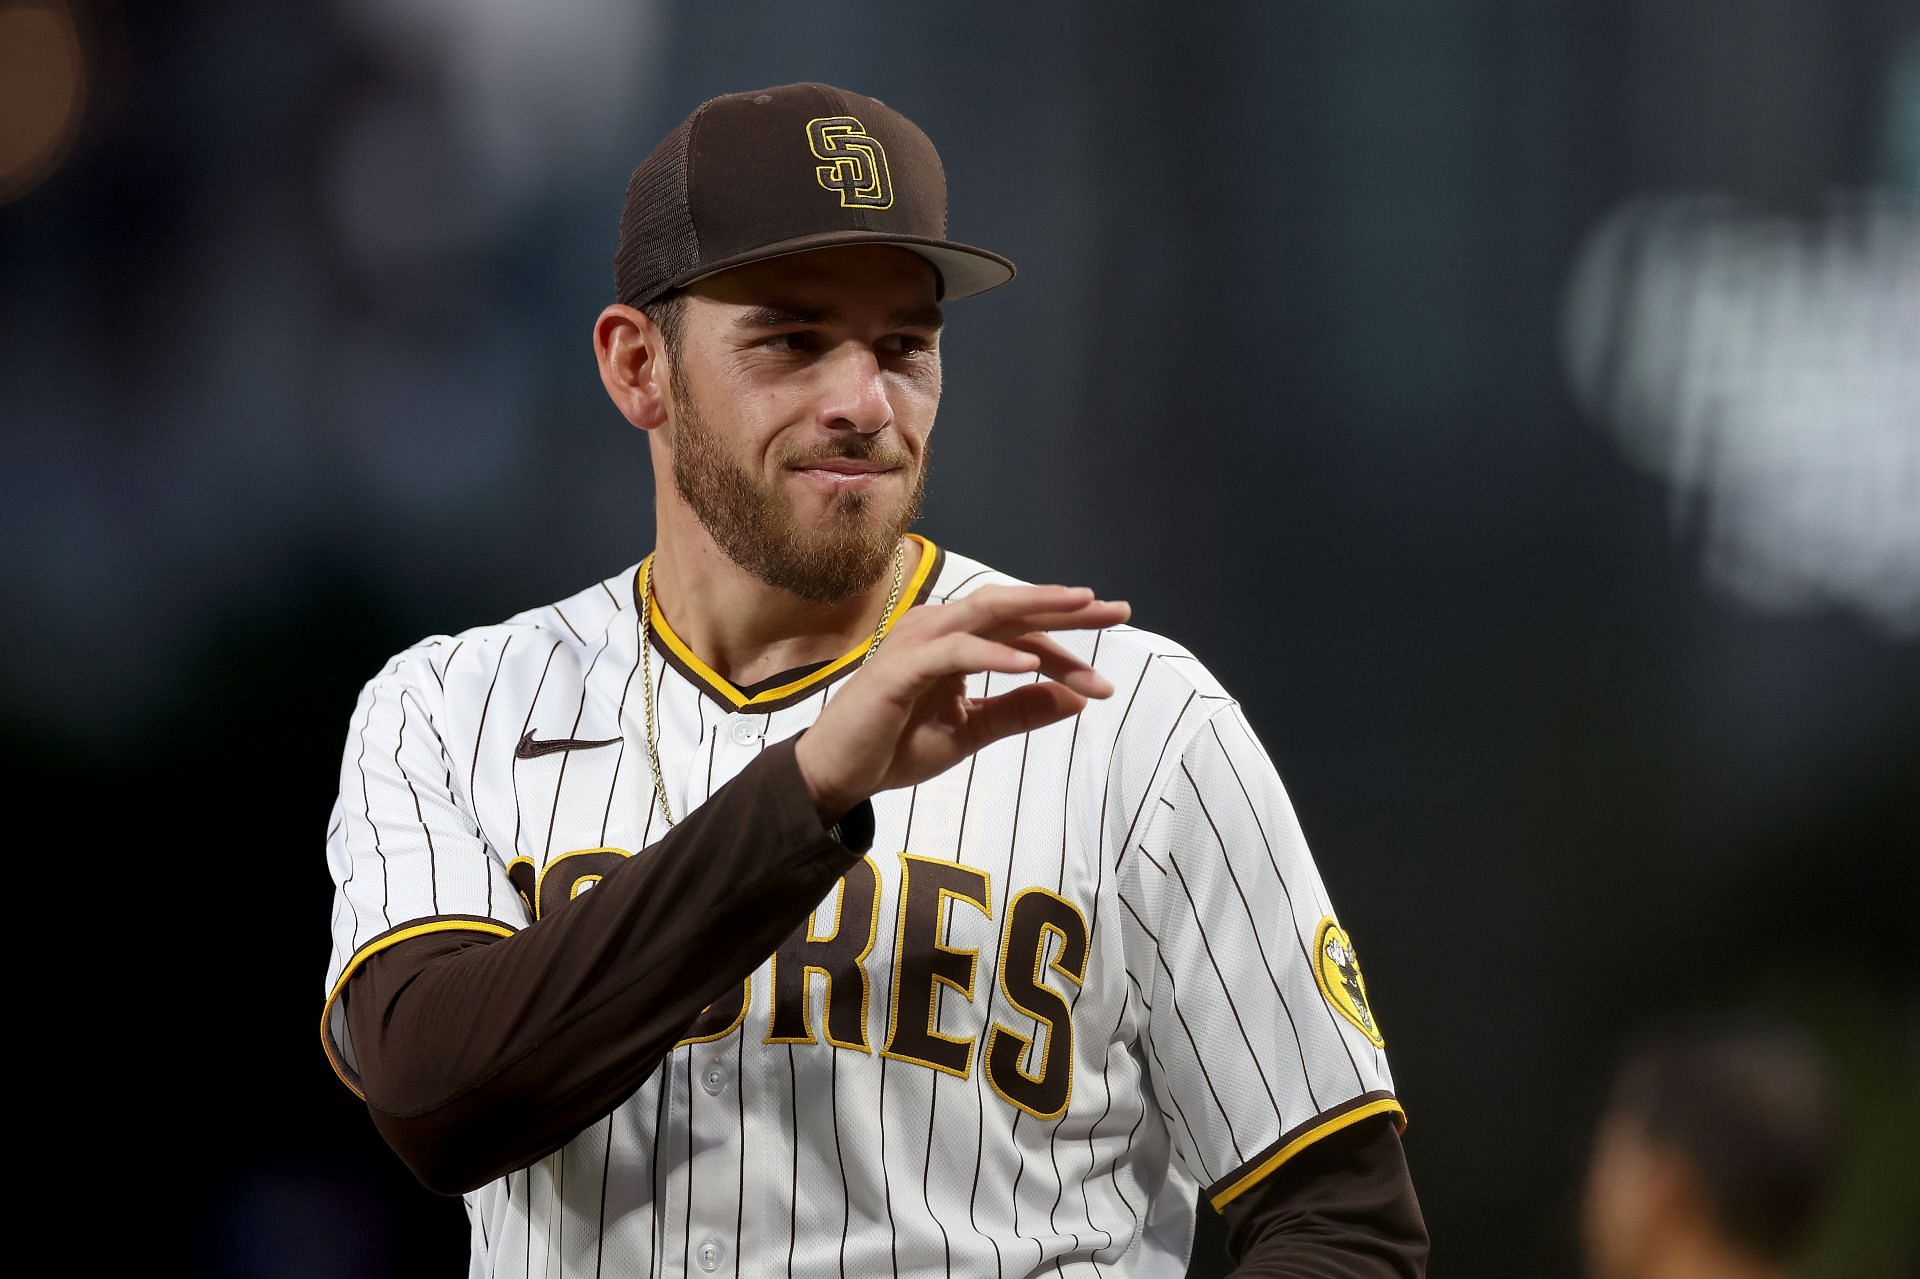 Gwynn, glory, generosity: Padres' Joe Musgrove on playing for San Diego